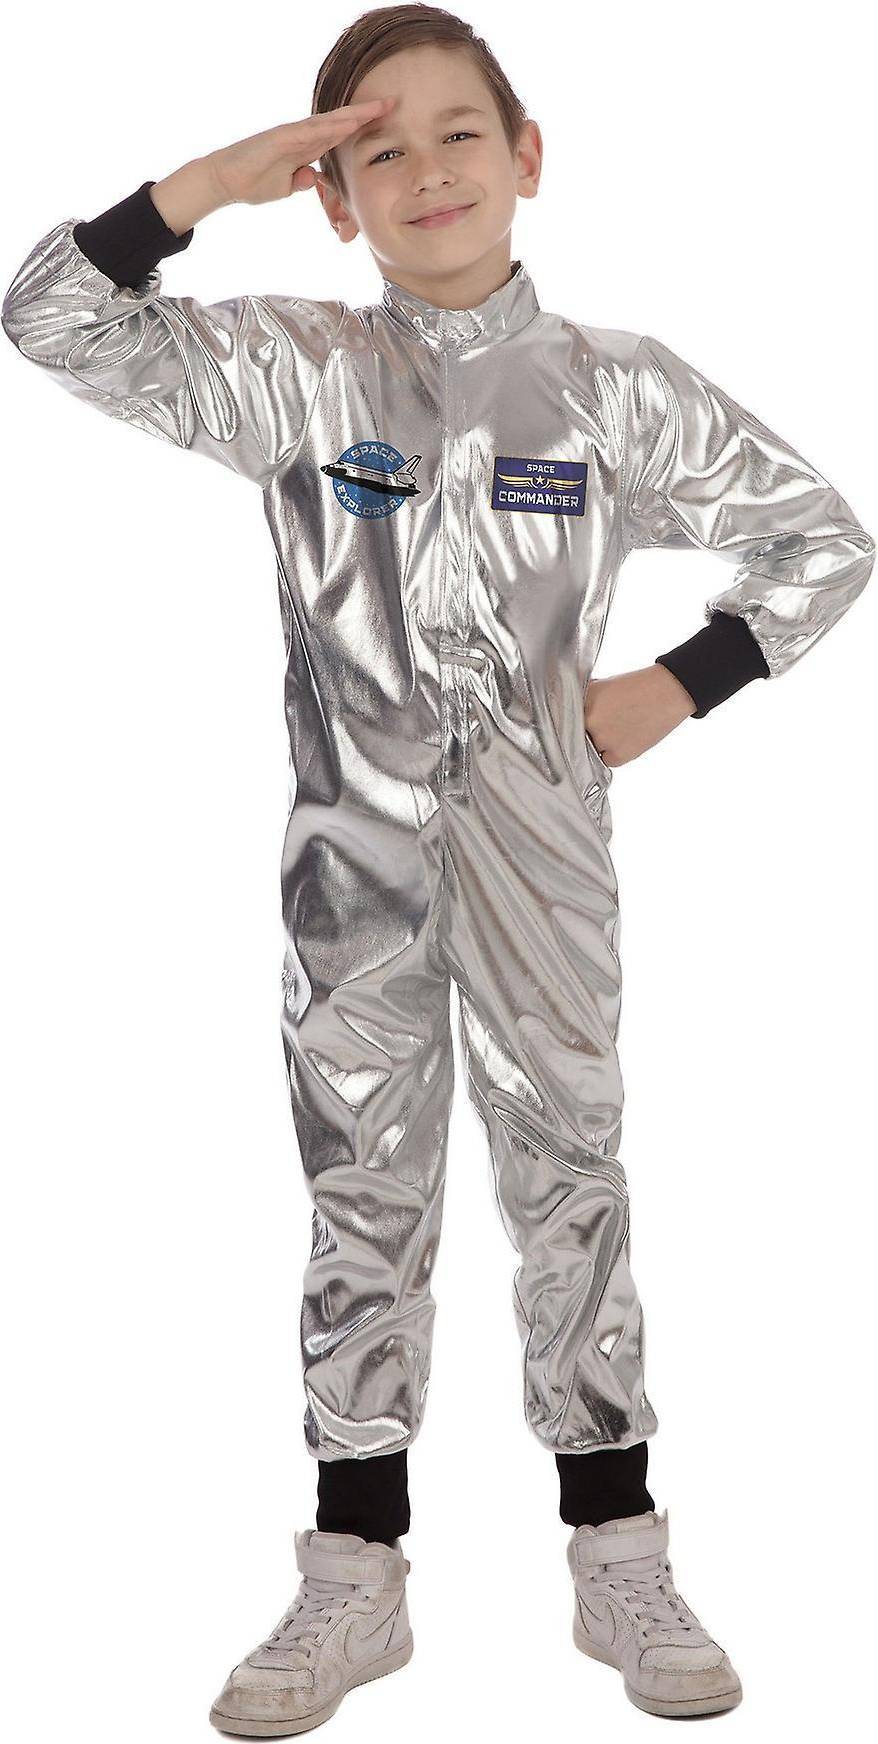 Bild på Bristol Novelties Bristol Novelty Barn/Kids Astronaut Jumpsuit Kostym Silver/Black/Blue S